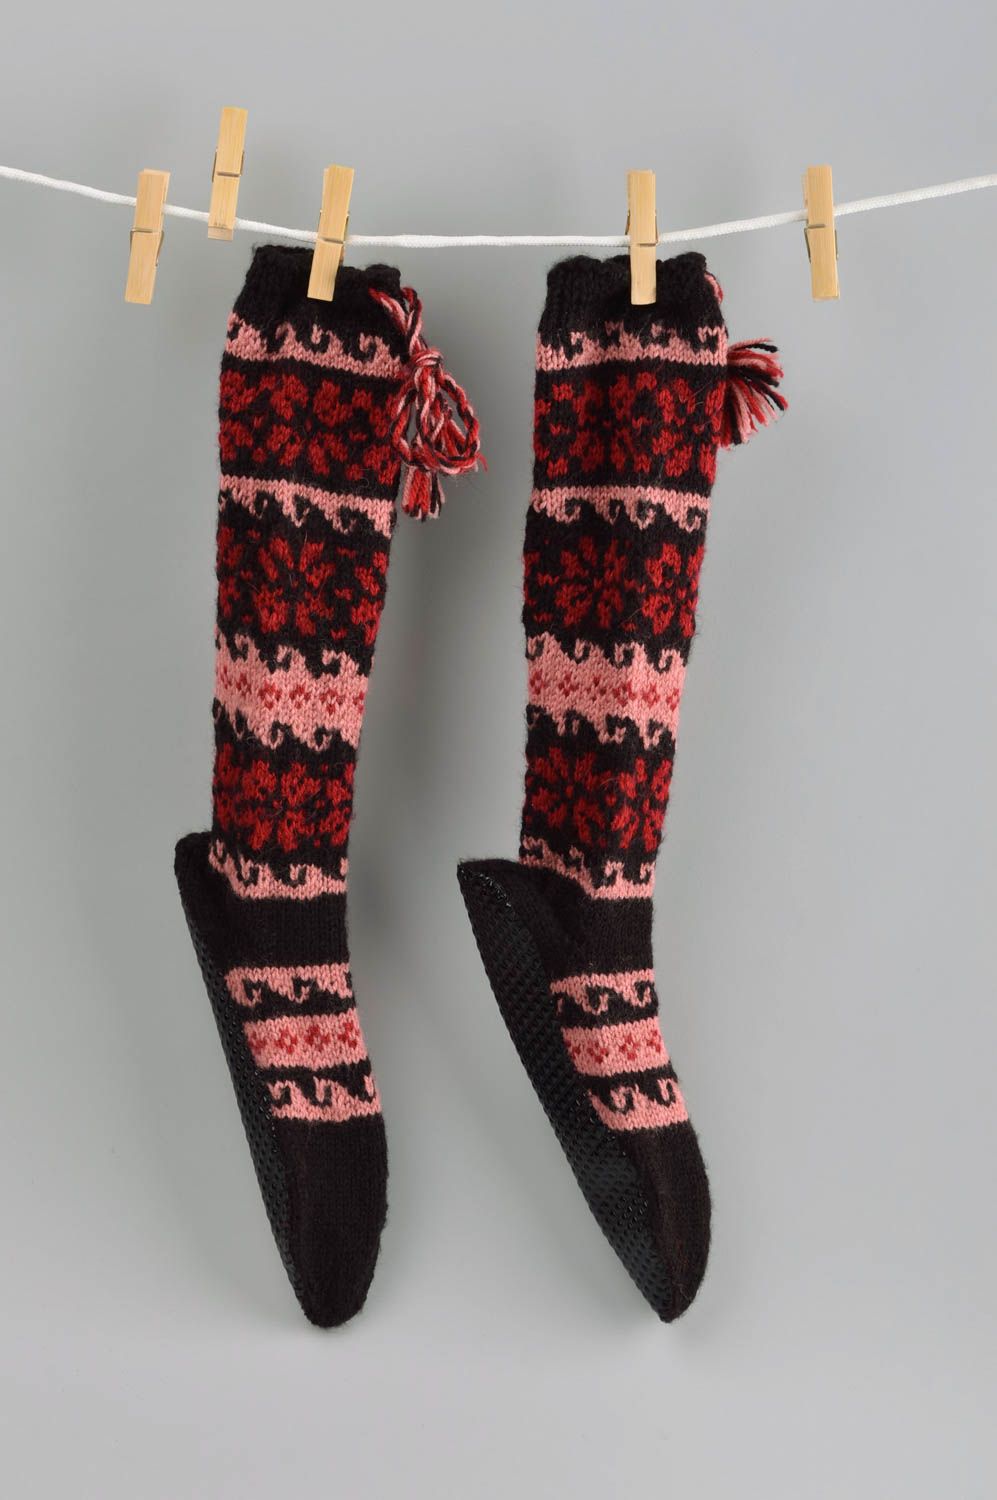 Handmade woolen warm socks unusual winter socks stylish winter accessory photo 1